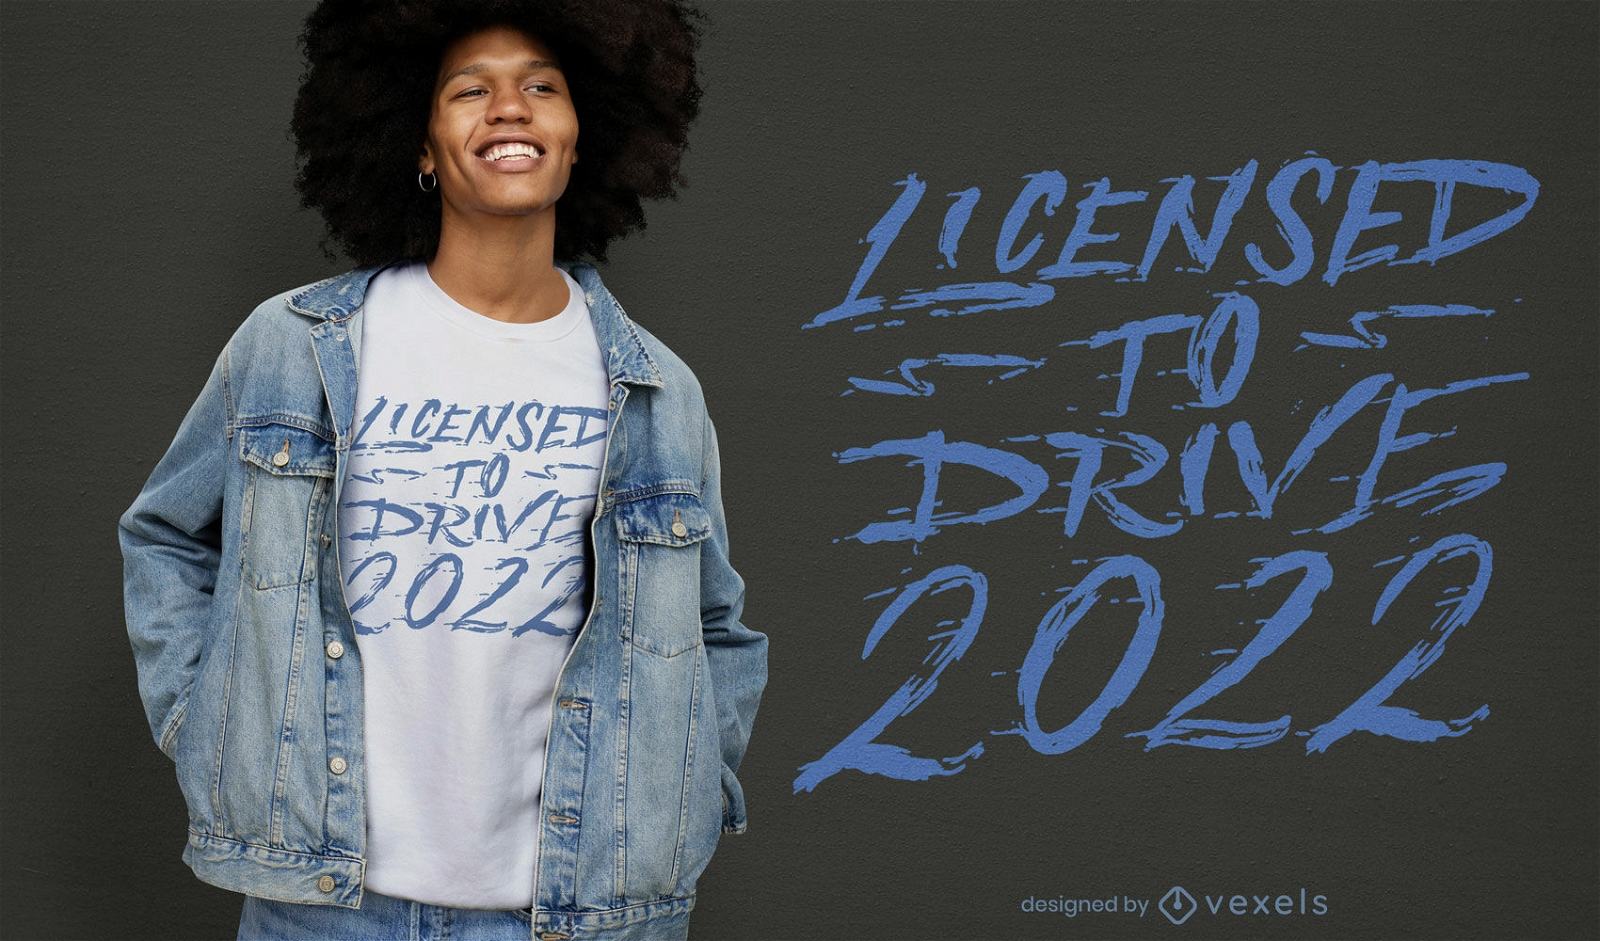 Licencia para conducir diseño de camiseta 2022